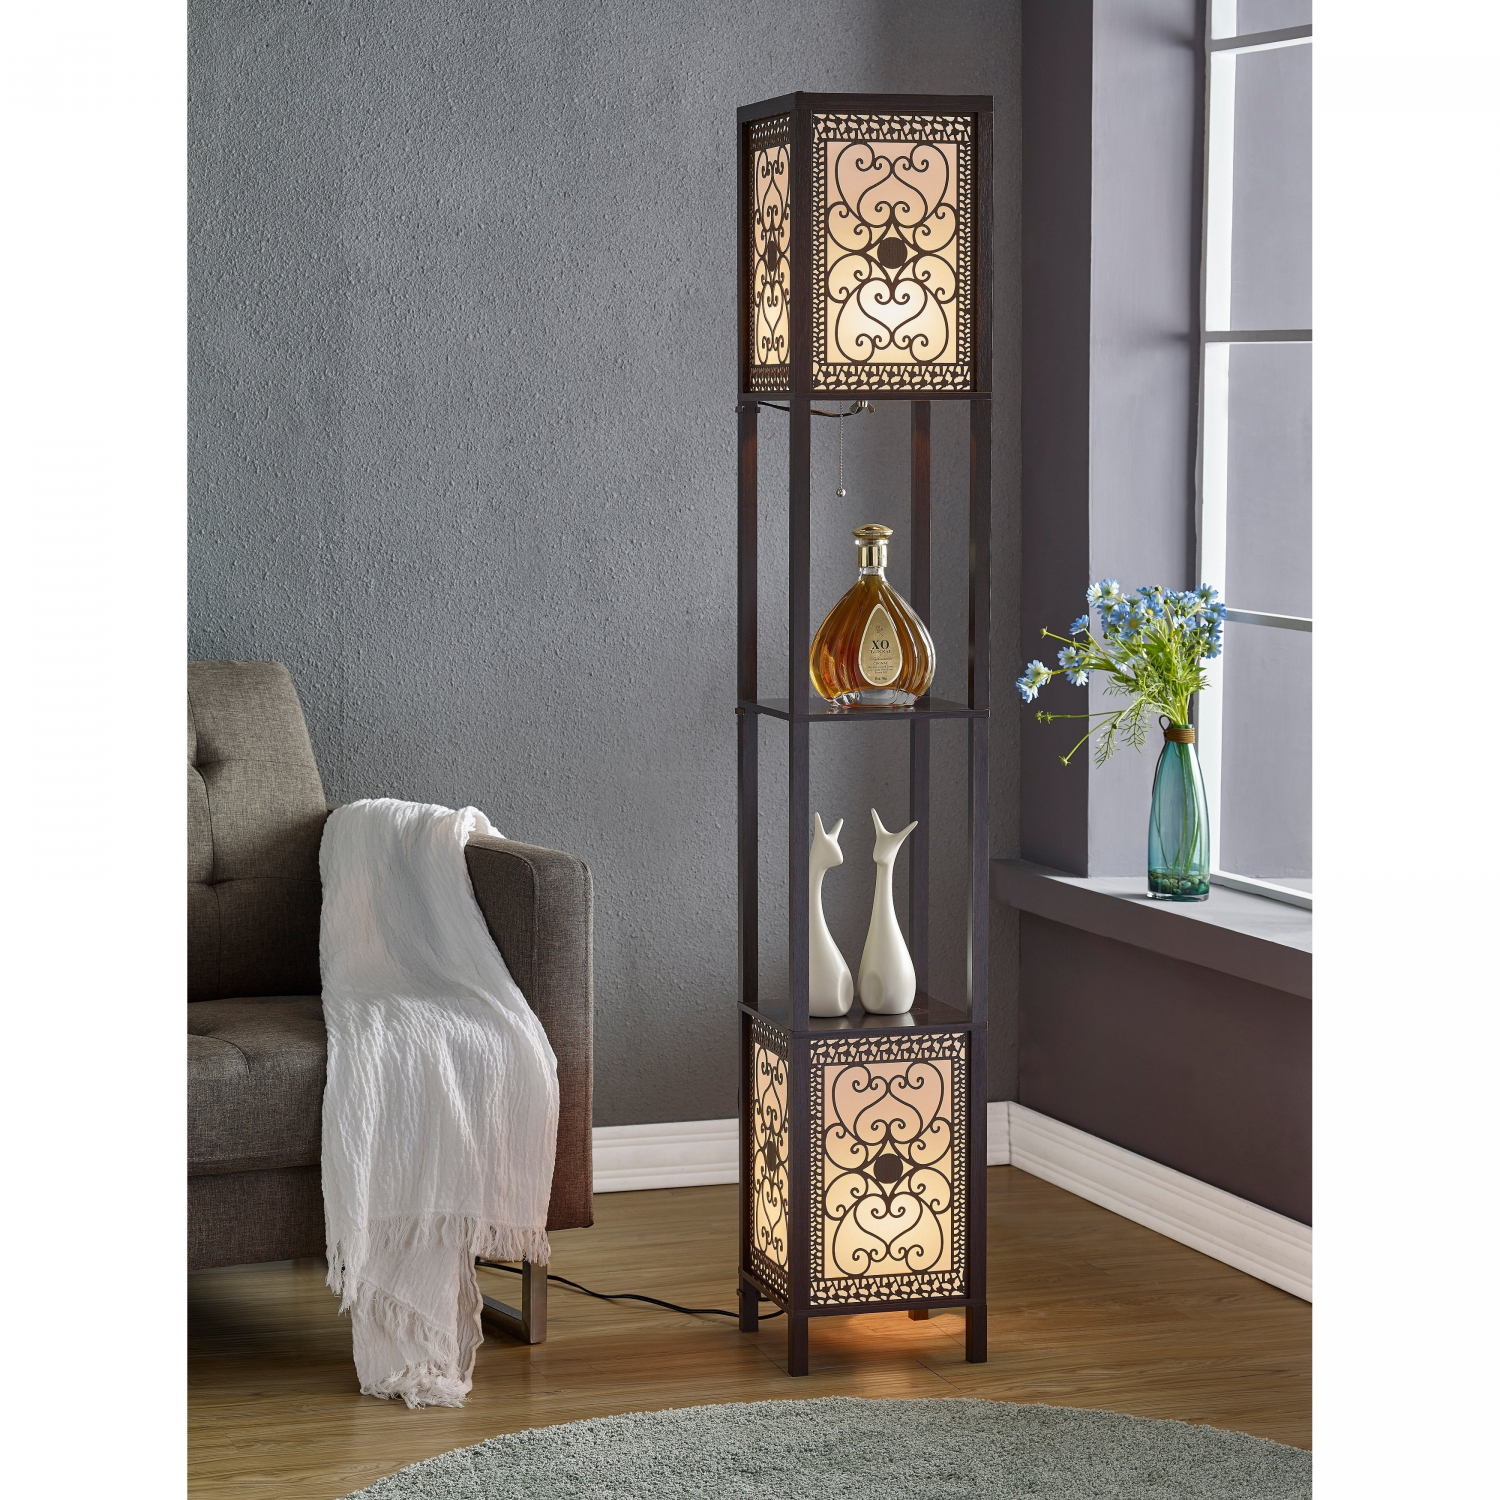 Details About Copper Grove Arans Infinity Heart Shelf 64 Inch Espresso Floor Lamp regarding sizing 1500 X 1500